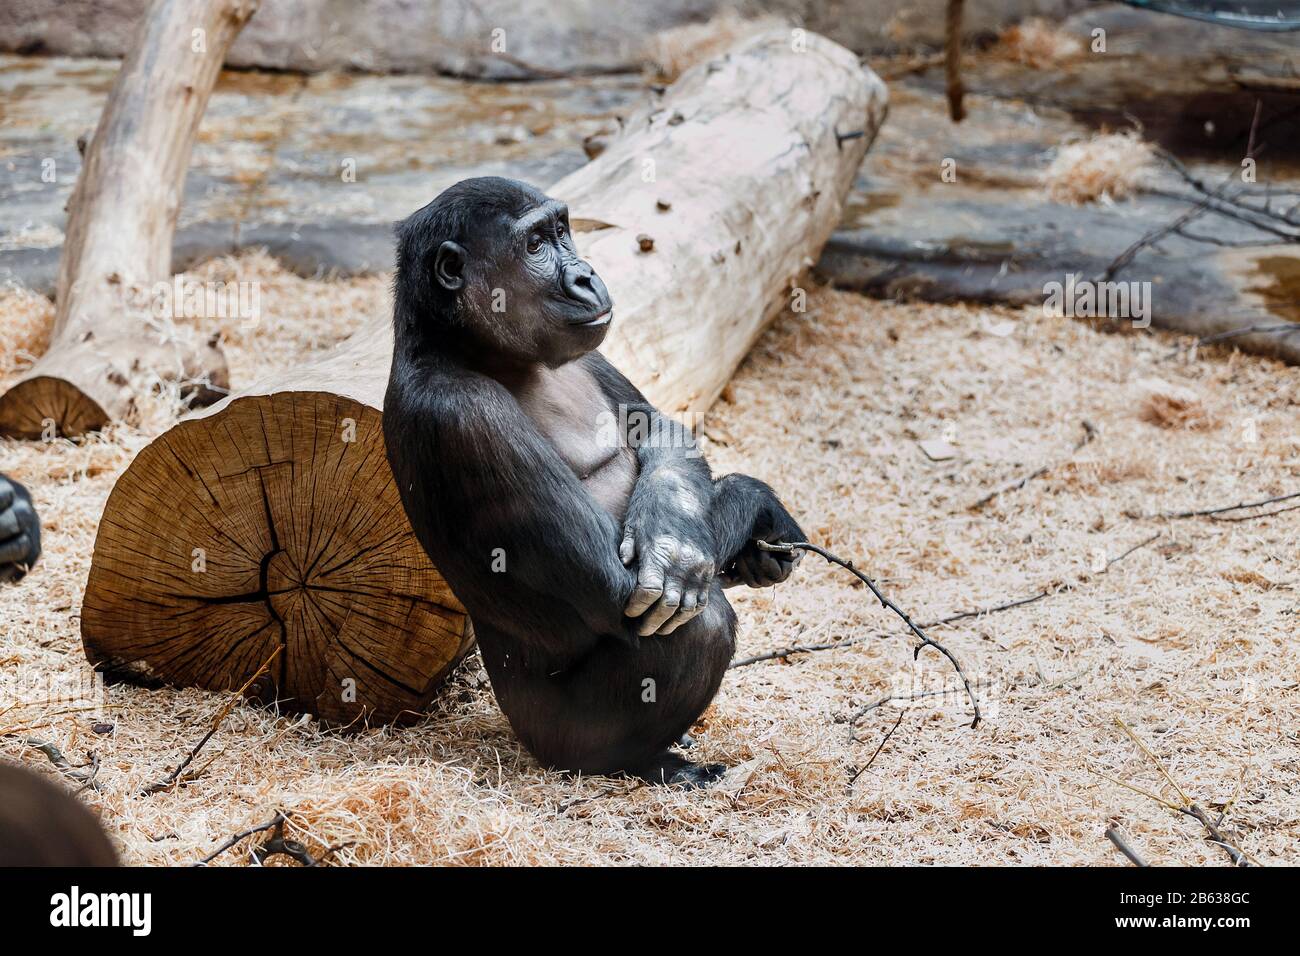 Gorila Femenina En El Zoo De Praga Foto de stock